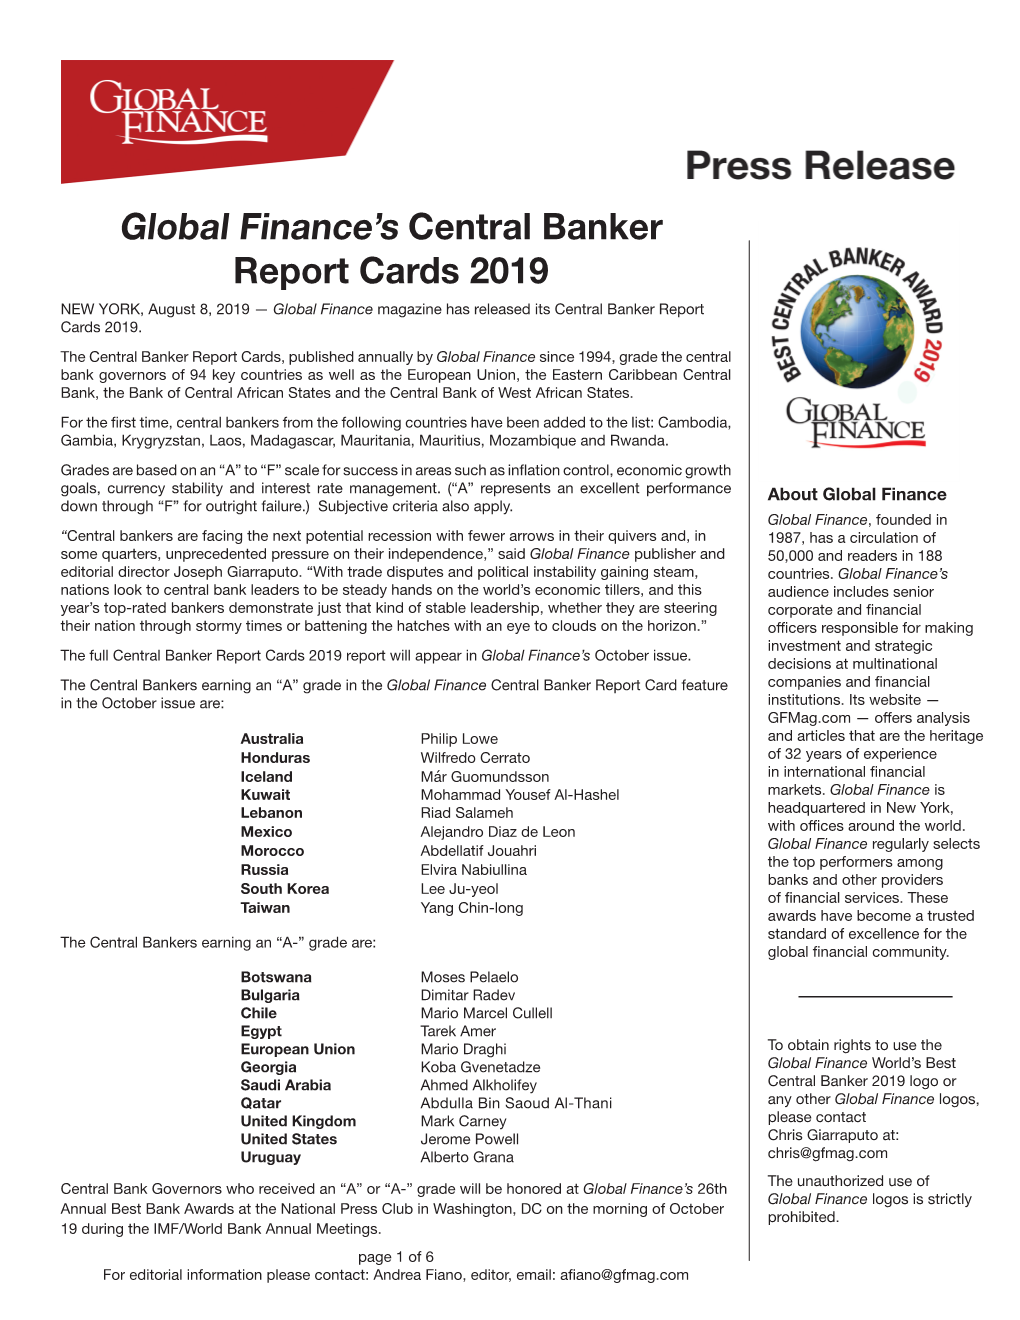 Global Finance's Central Banker Report Cards 2019